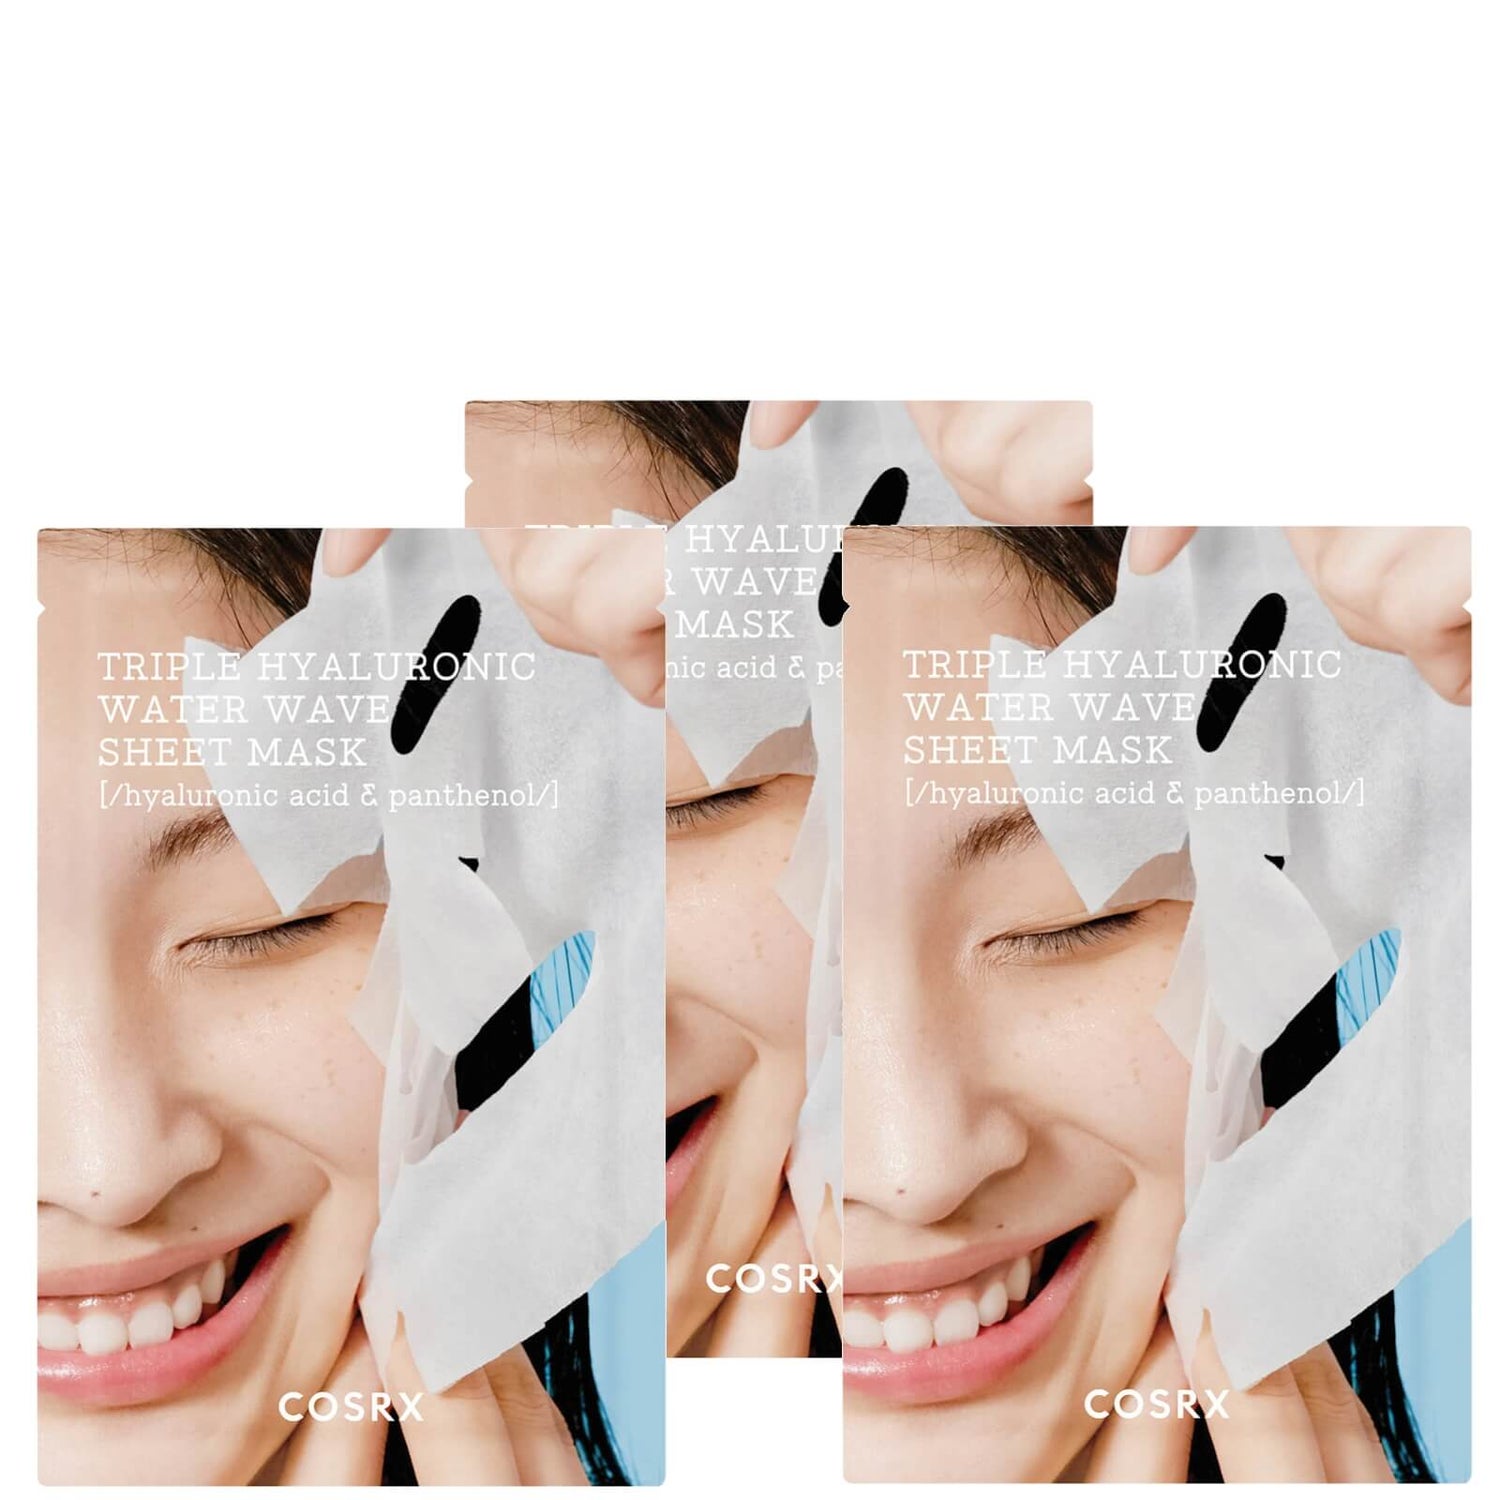 COSRX Triple Hyaluronic Water Wave Sheet Mask (förpackning med 3 st)